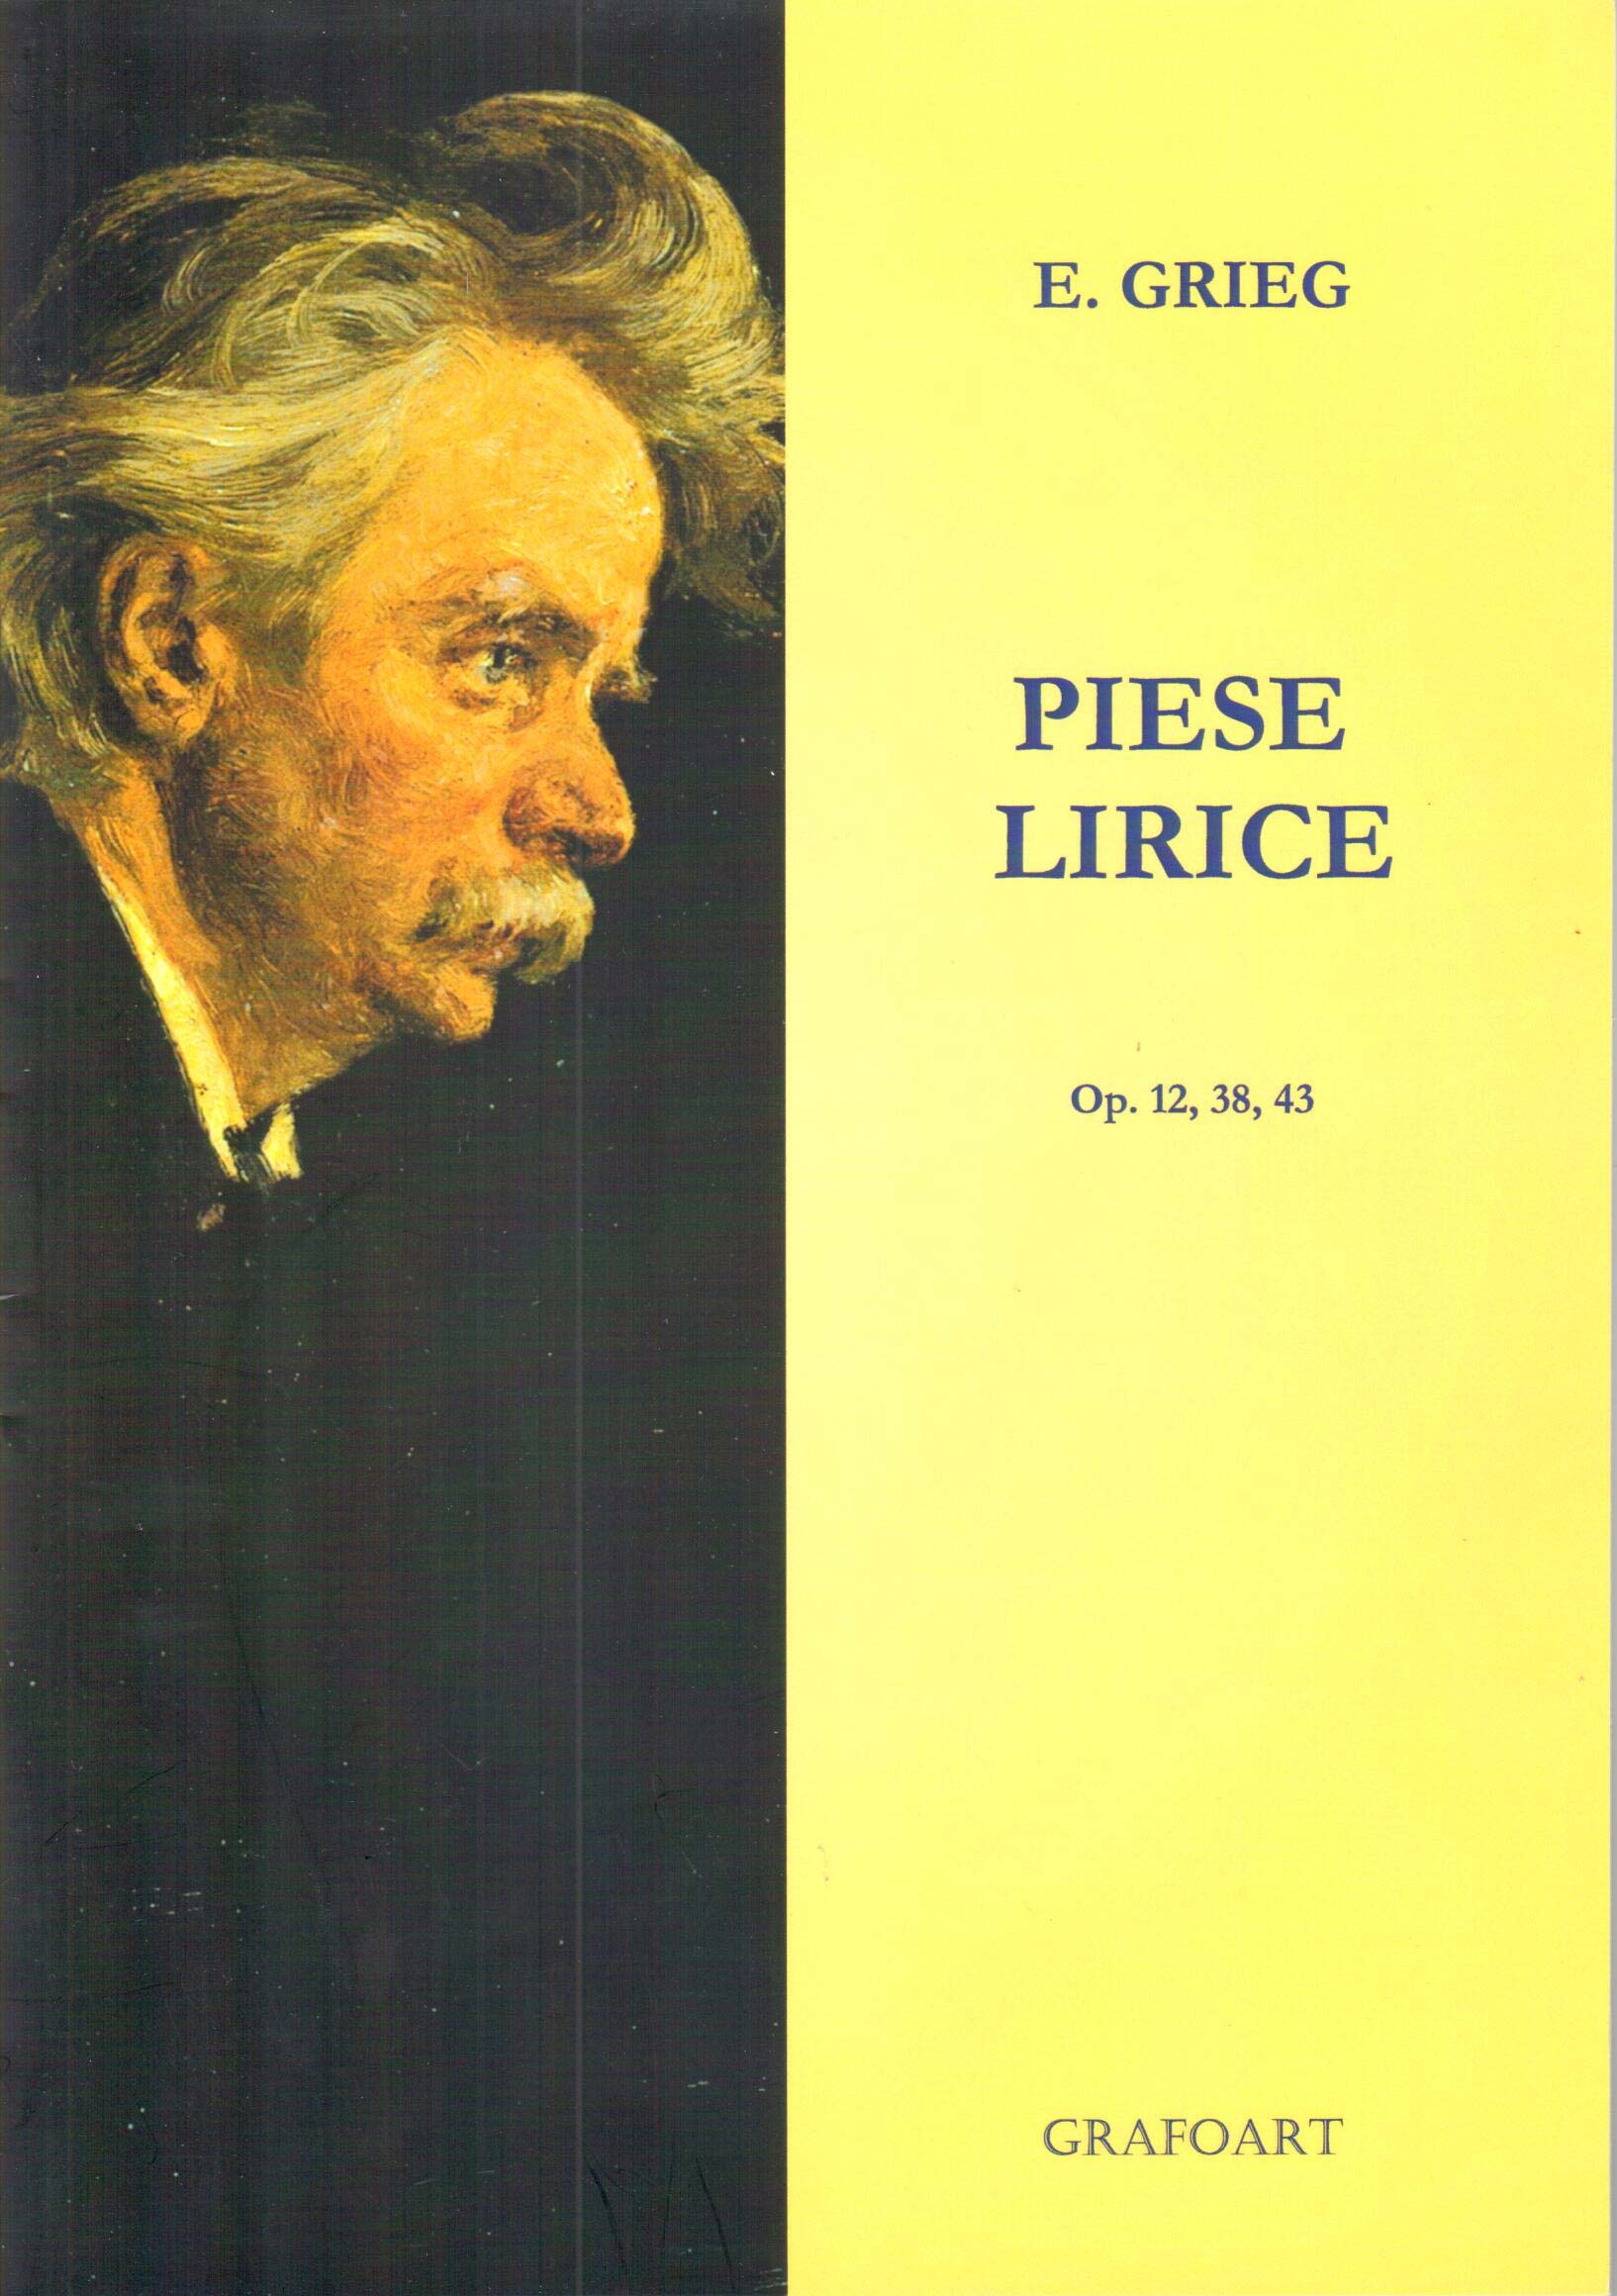 Piese lirice - Op. 12, 38, 43